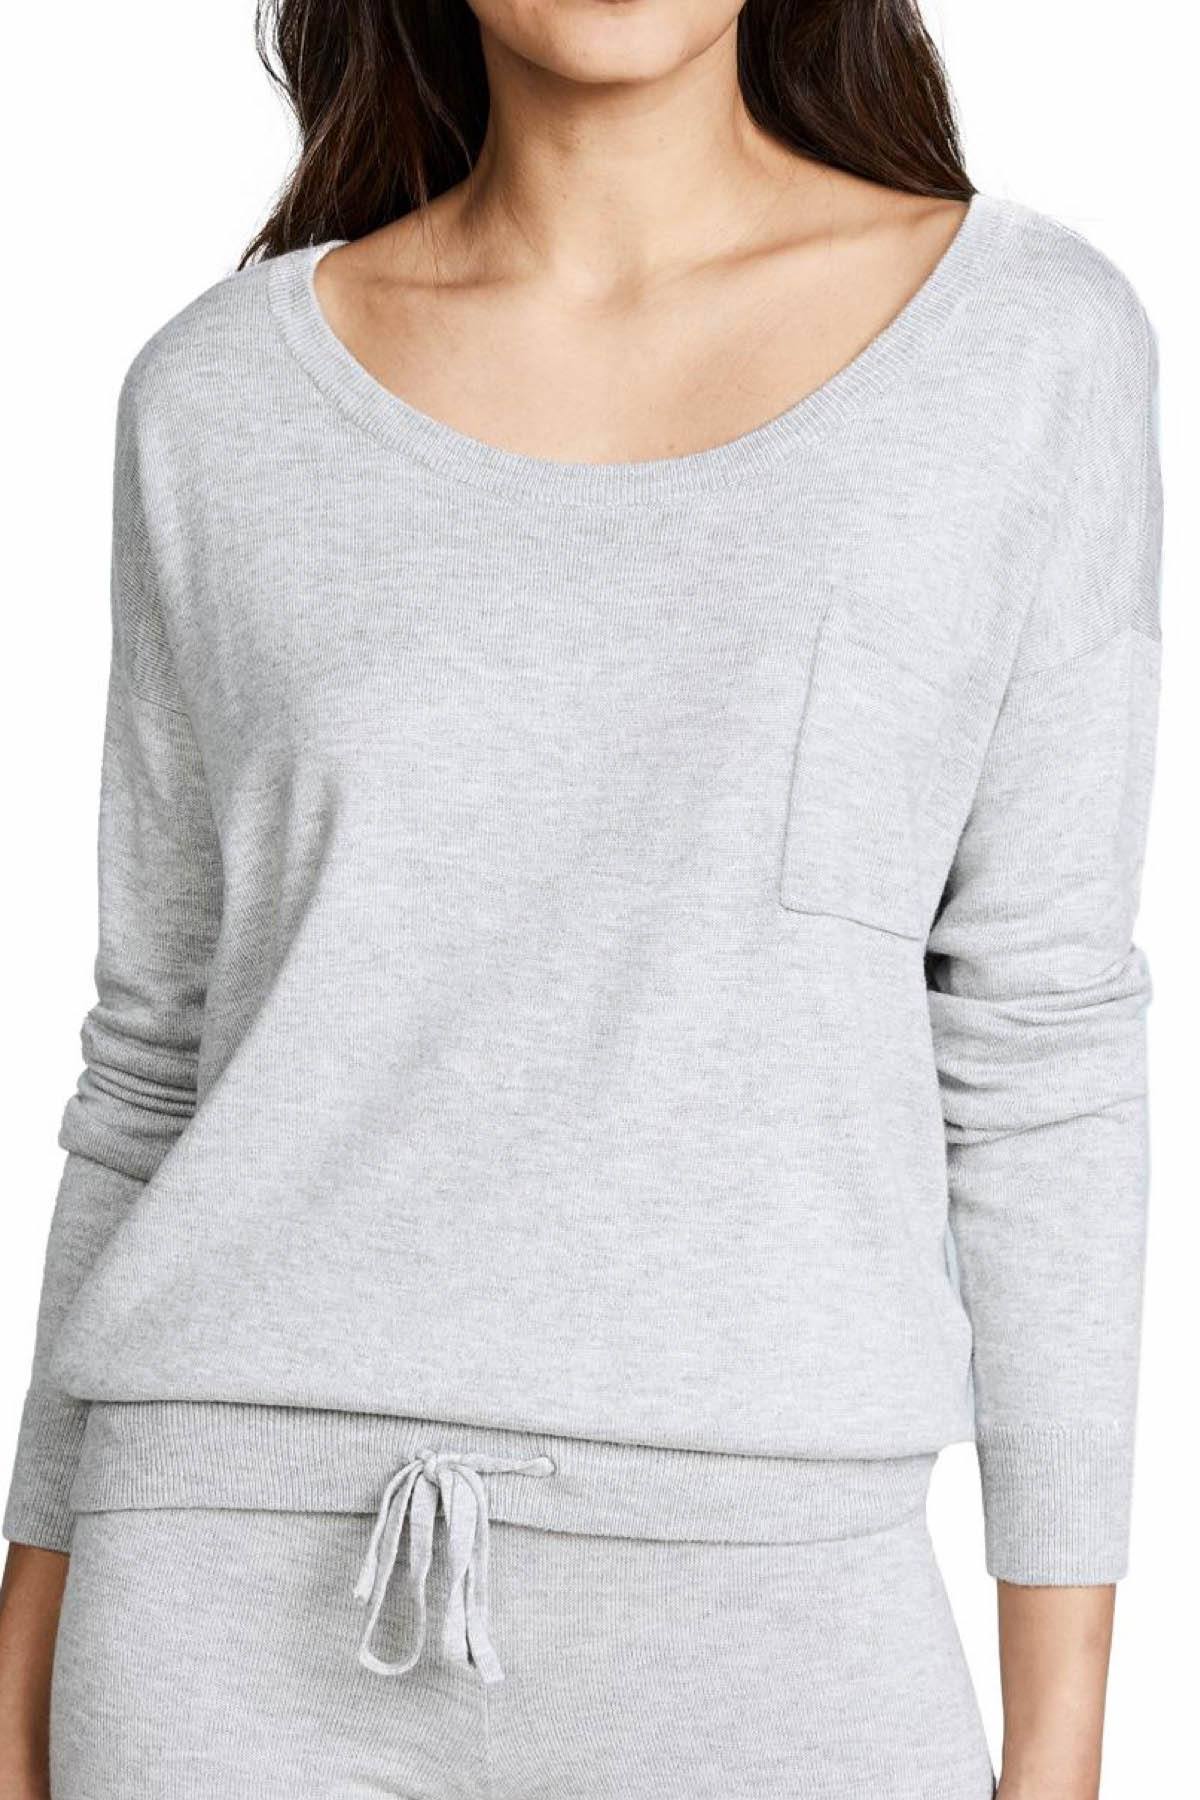 Calvin Klein Sleepwear Grey Pure-Knits Long-Sleeve Lounge Top | CheapUndies